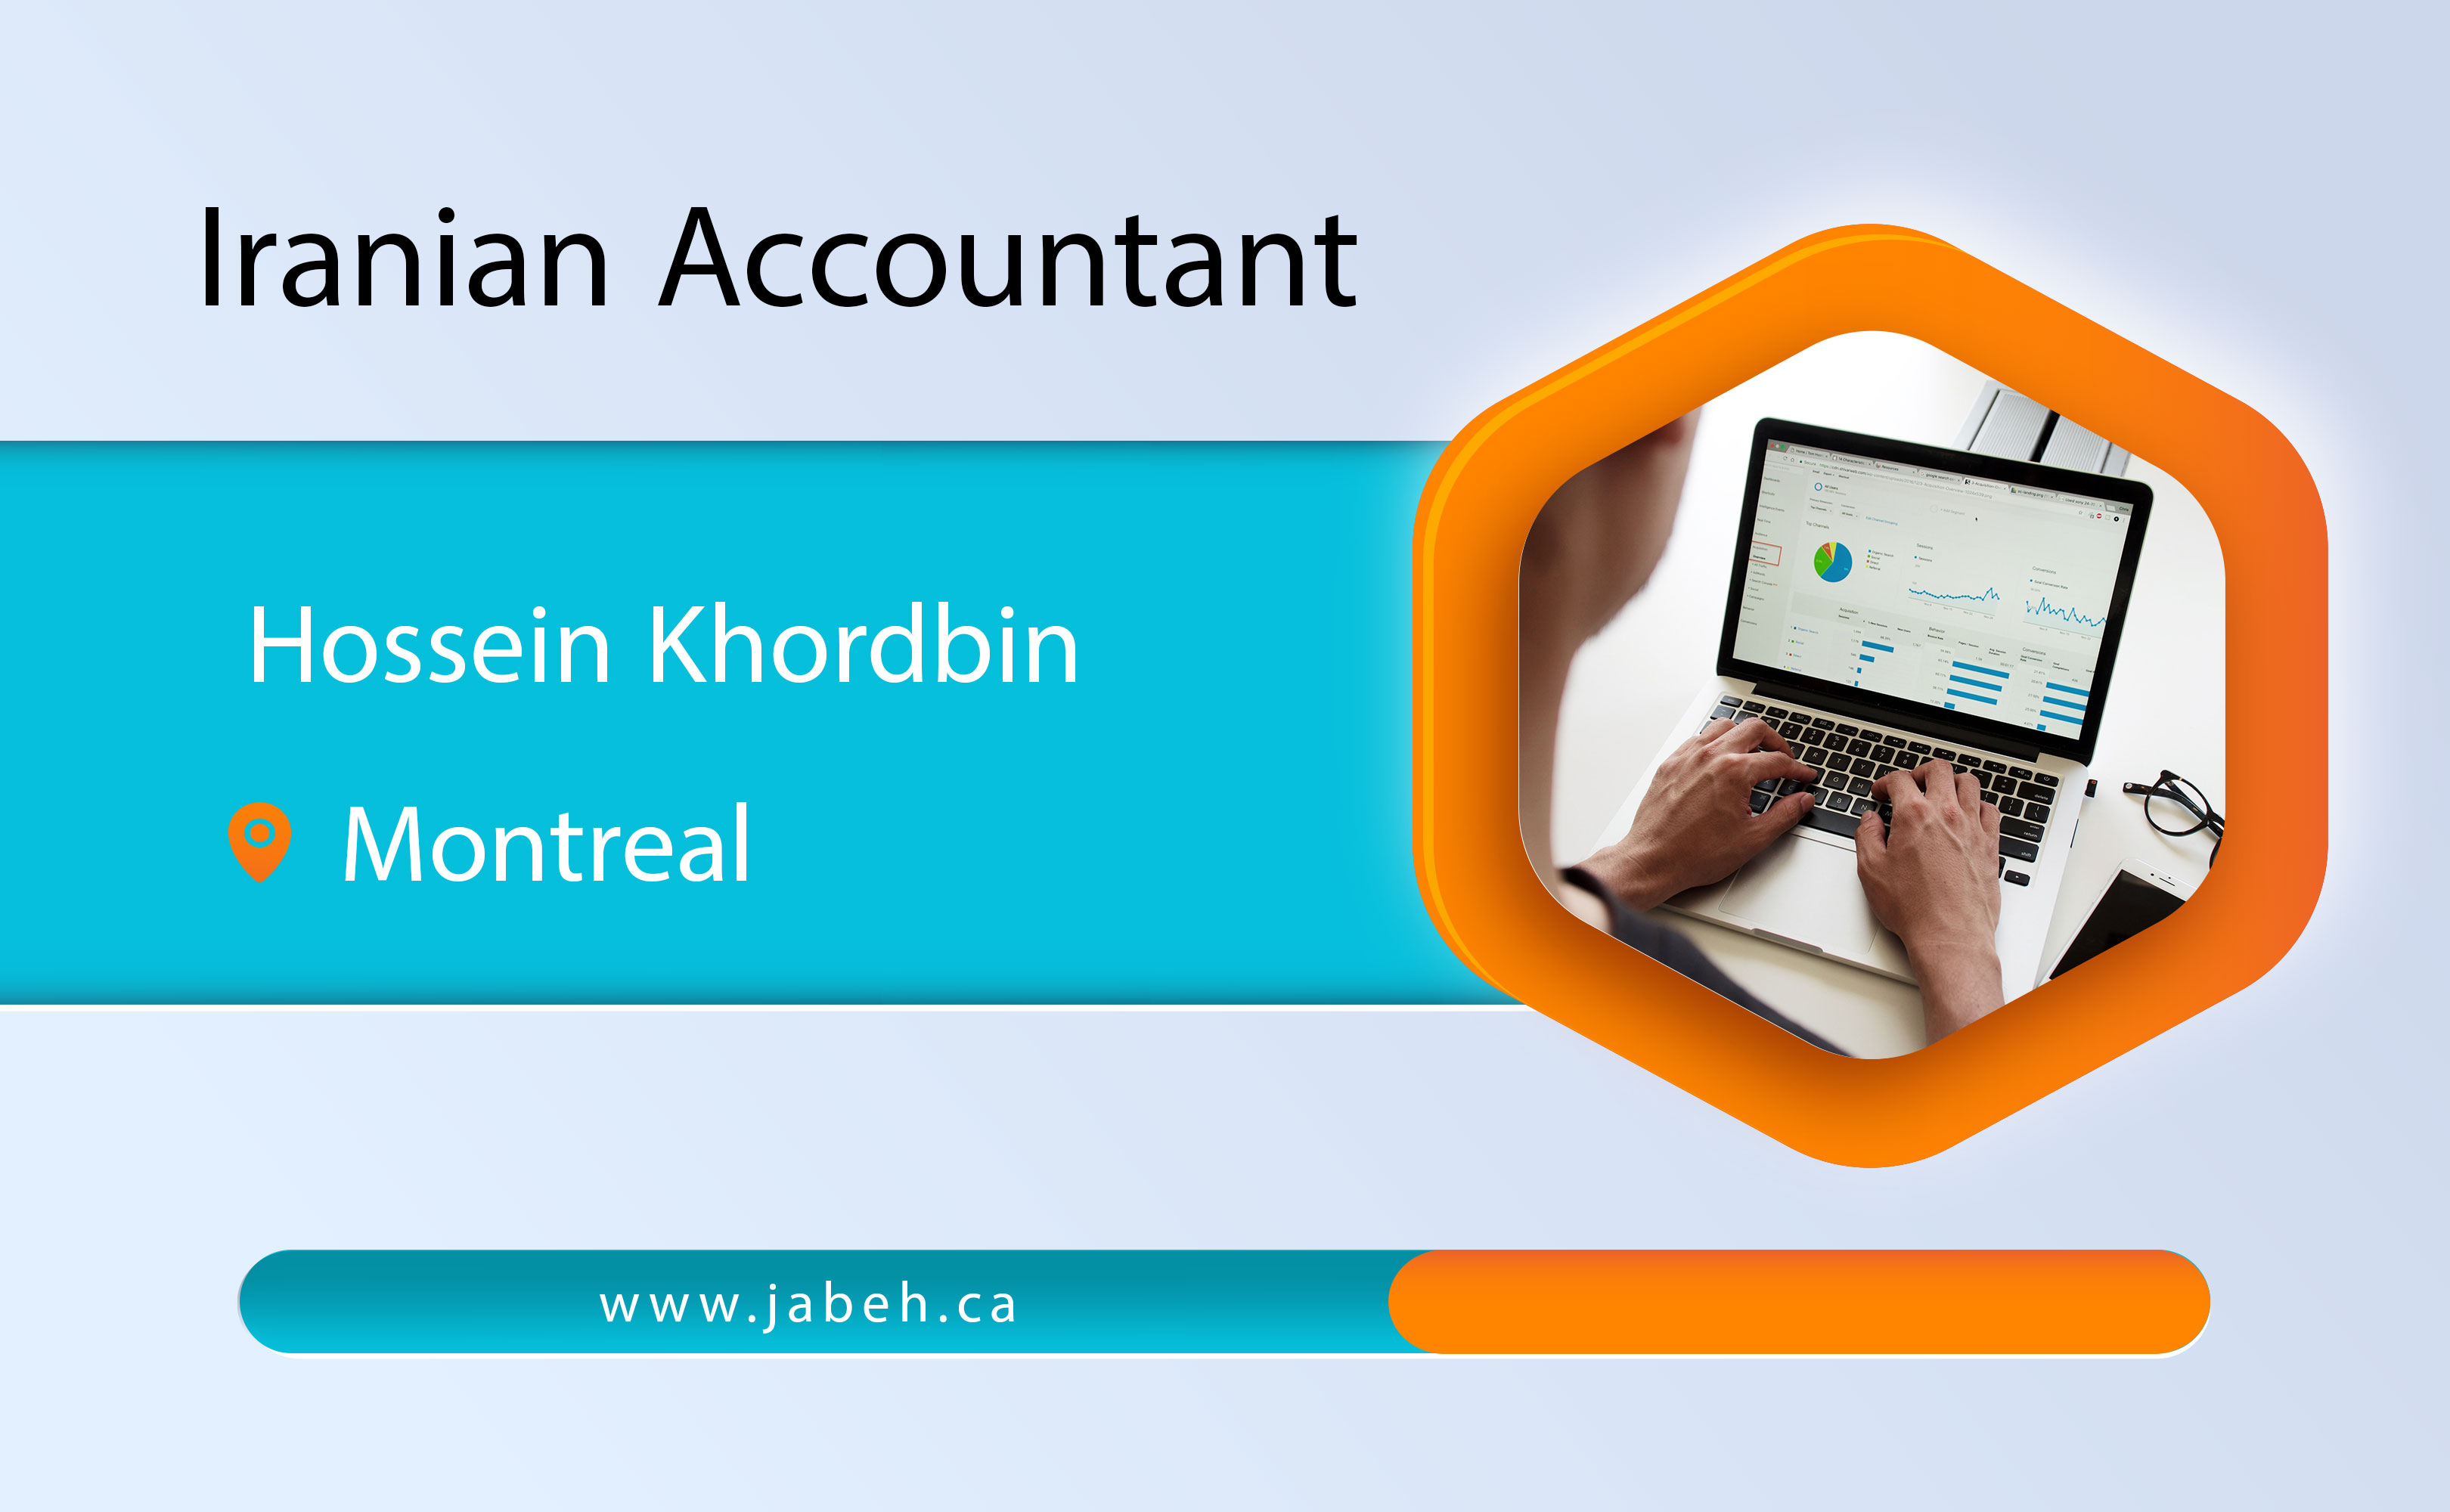 Iranian accounting of Hossein Khordbin in Montreal